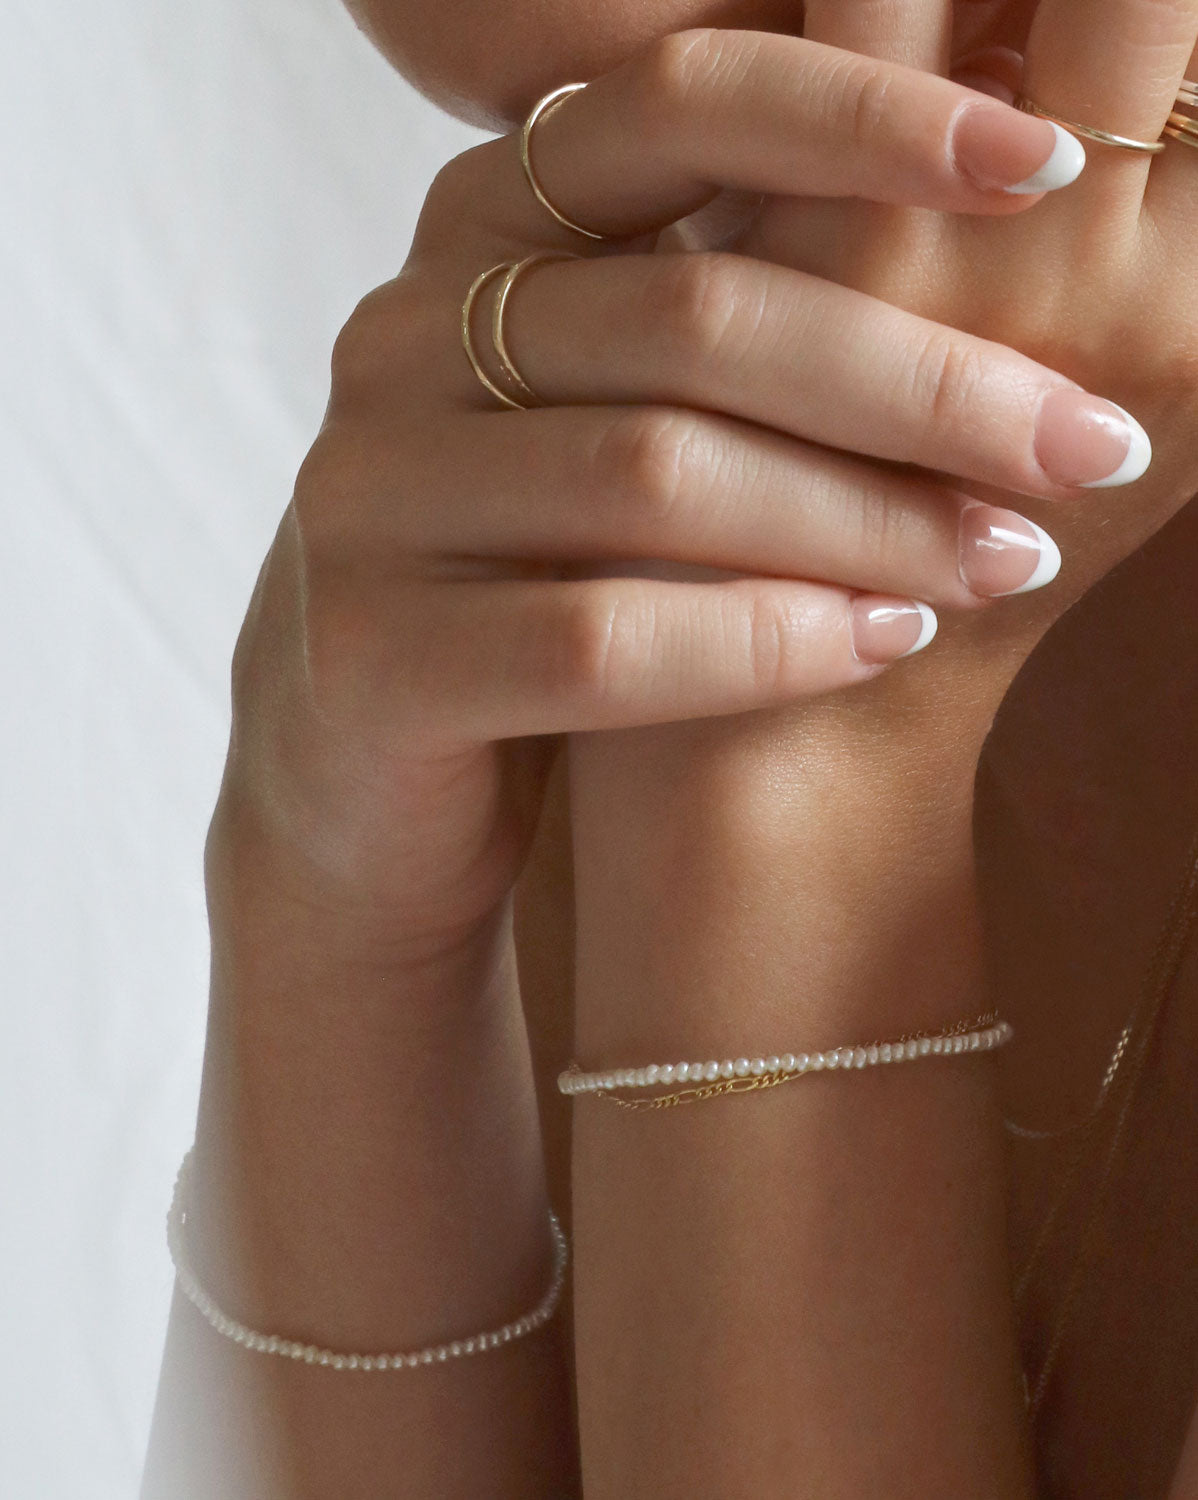 Luminous Pearl Bracelet